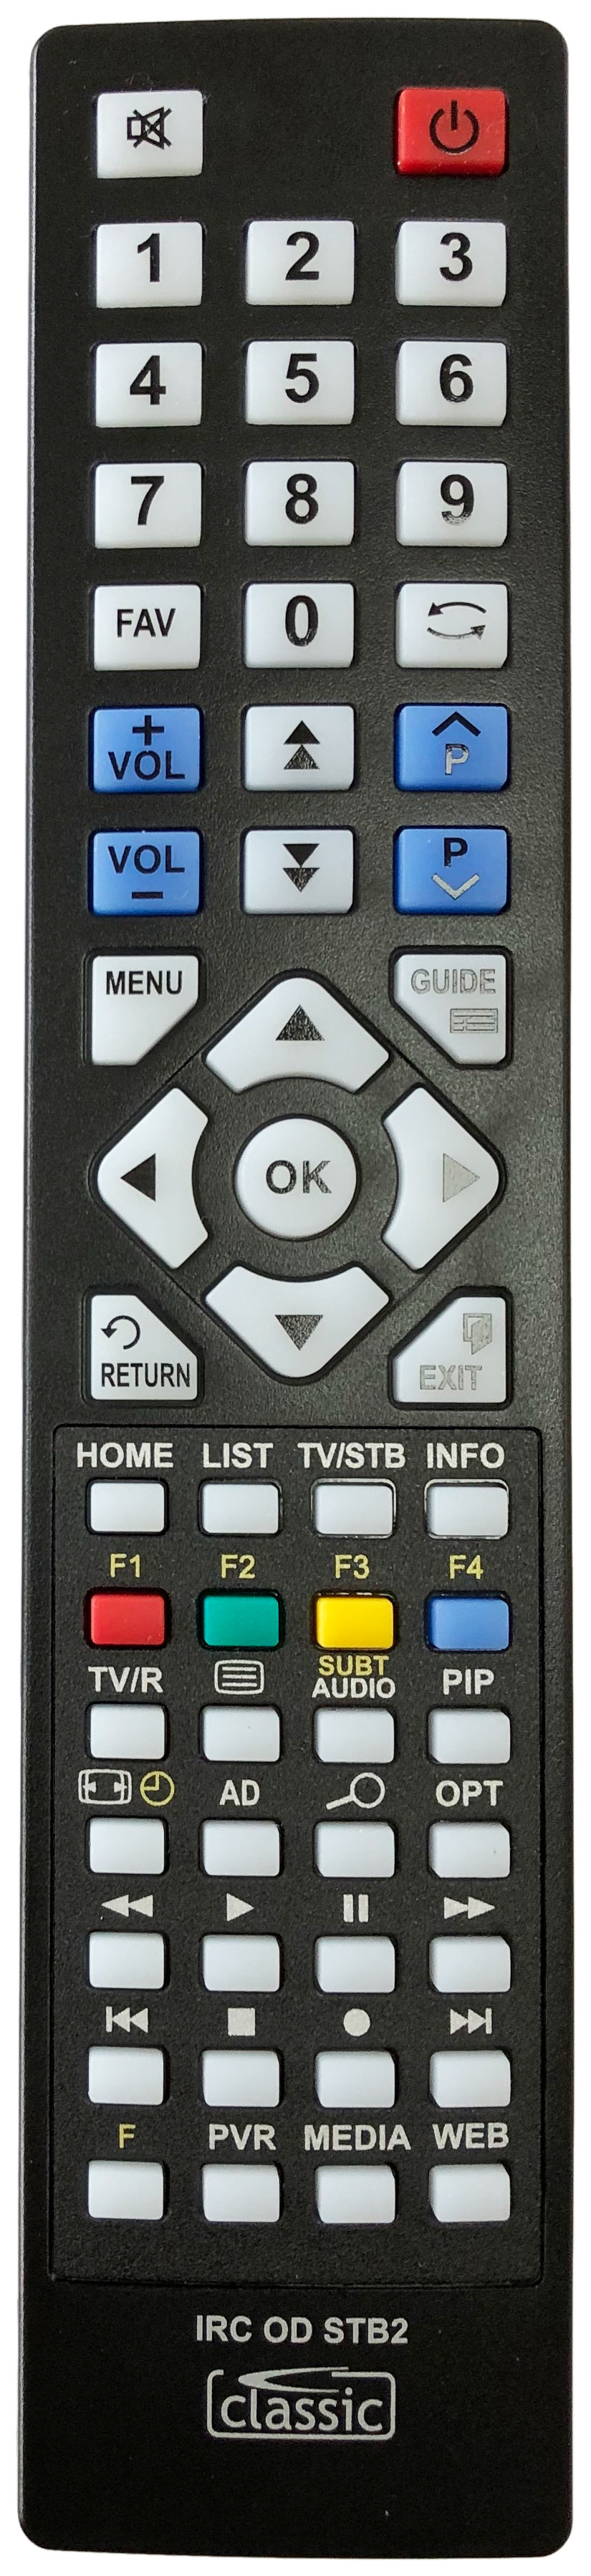 HUMAX RM-G10 Remote Control